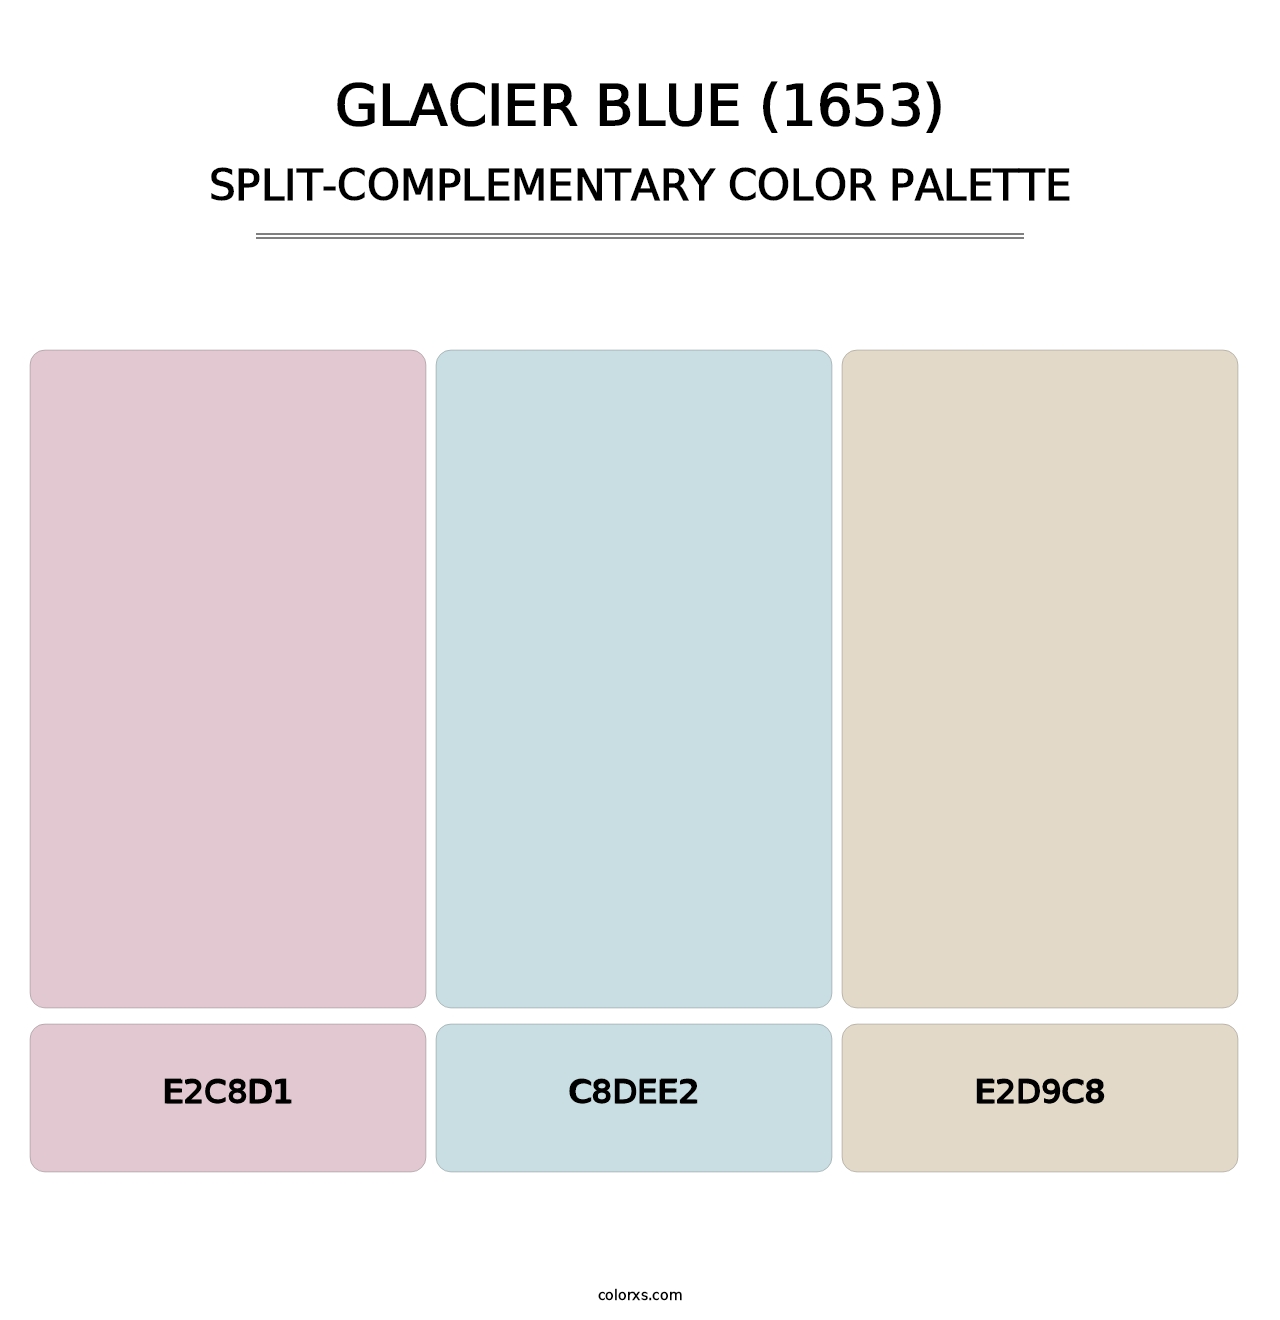 Glacier Blue (1653) - Split-Complementary Color Palette